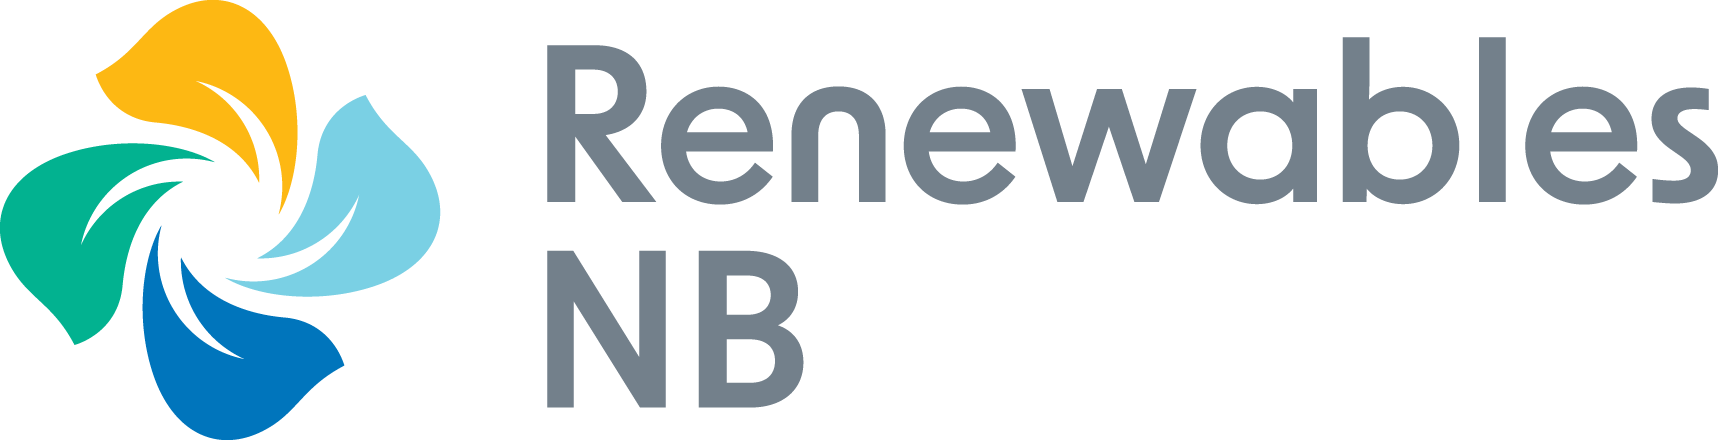 Renewables NB